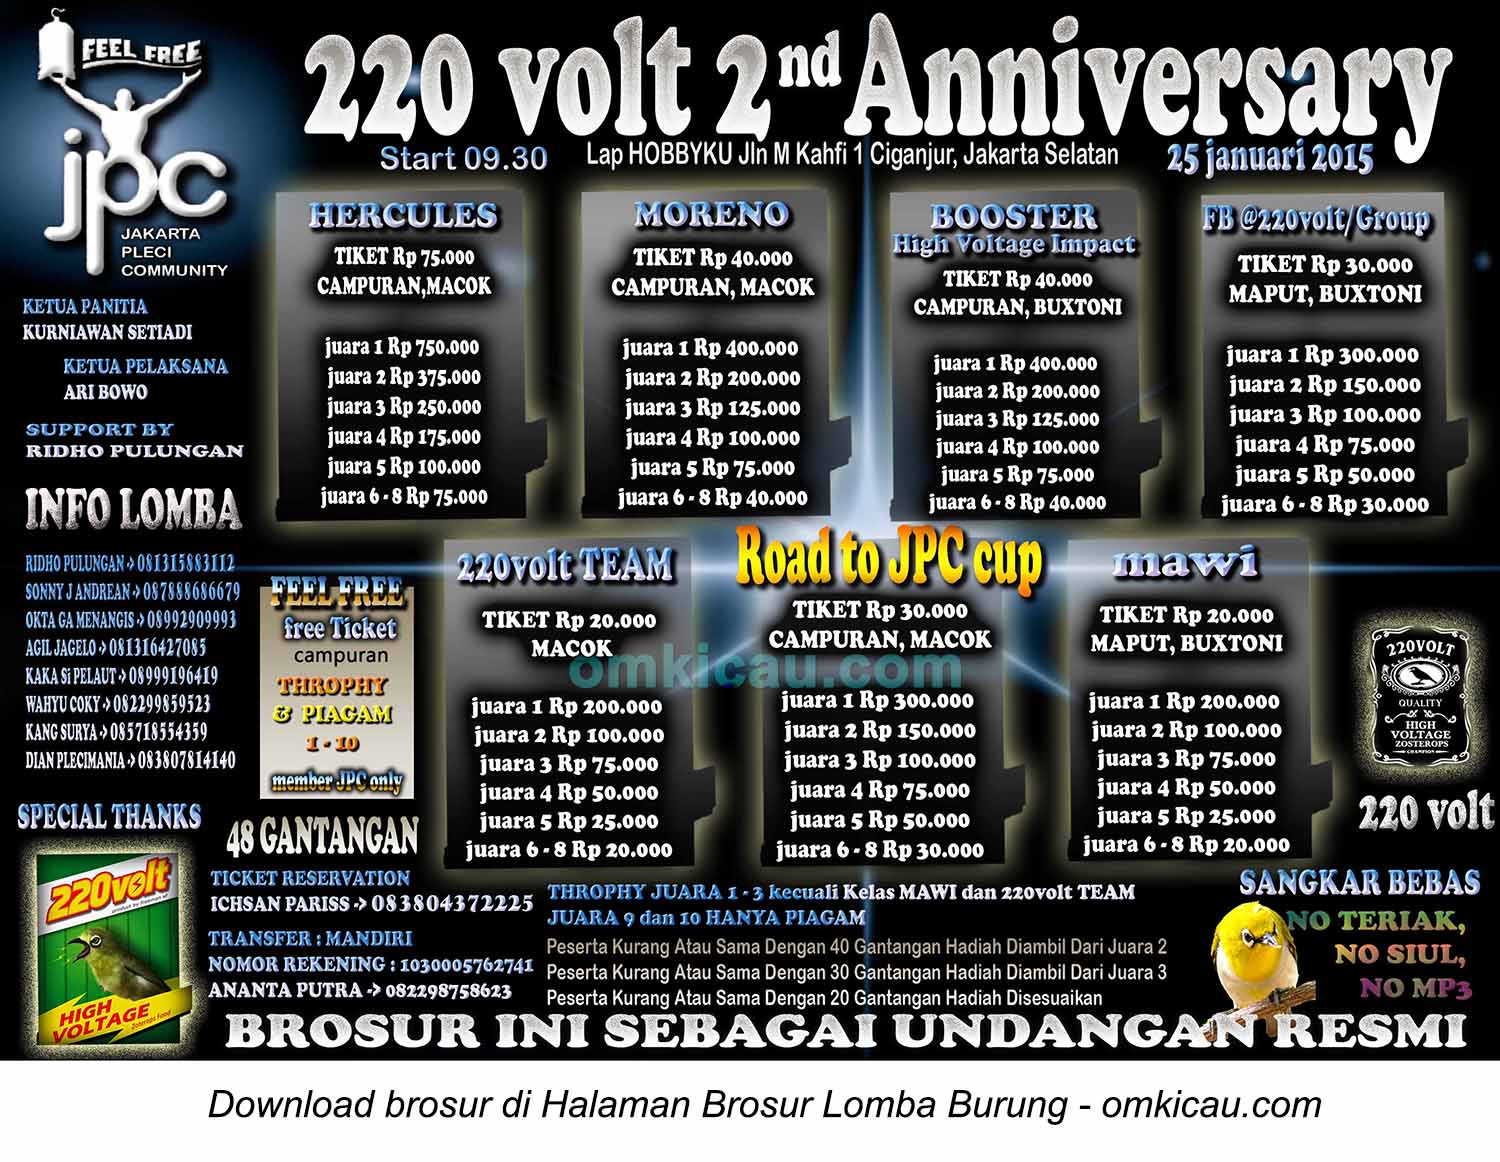 Brosur Lomba Burung Berkicau 220 Volt 2nd Anniversary, Jakarta Selatan, 25 Januari 2015